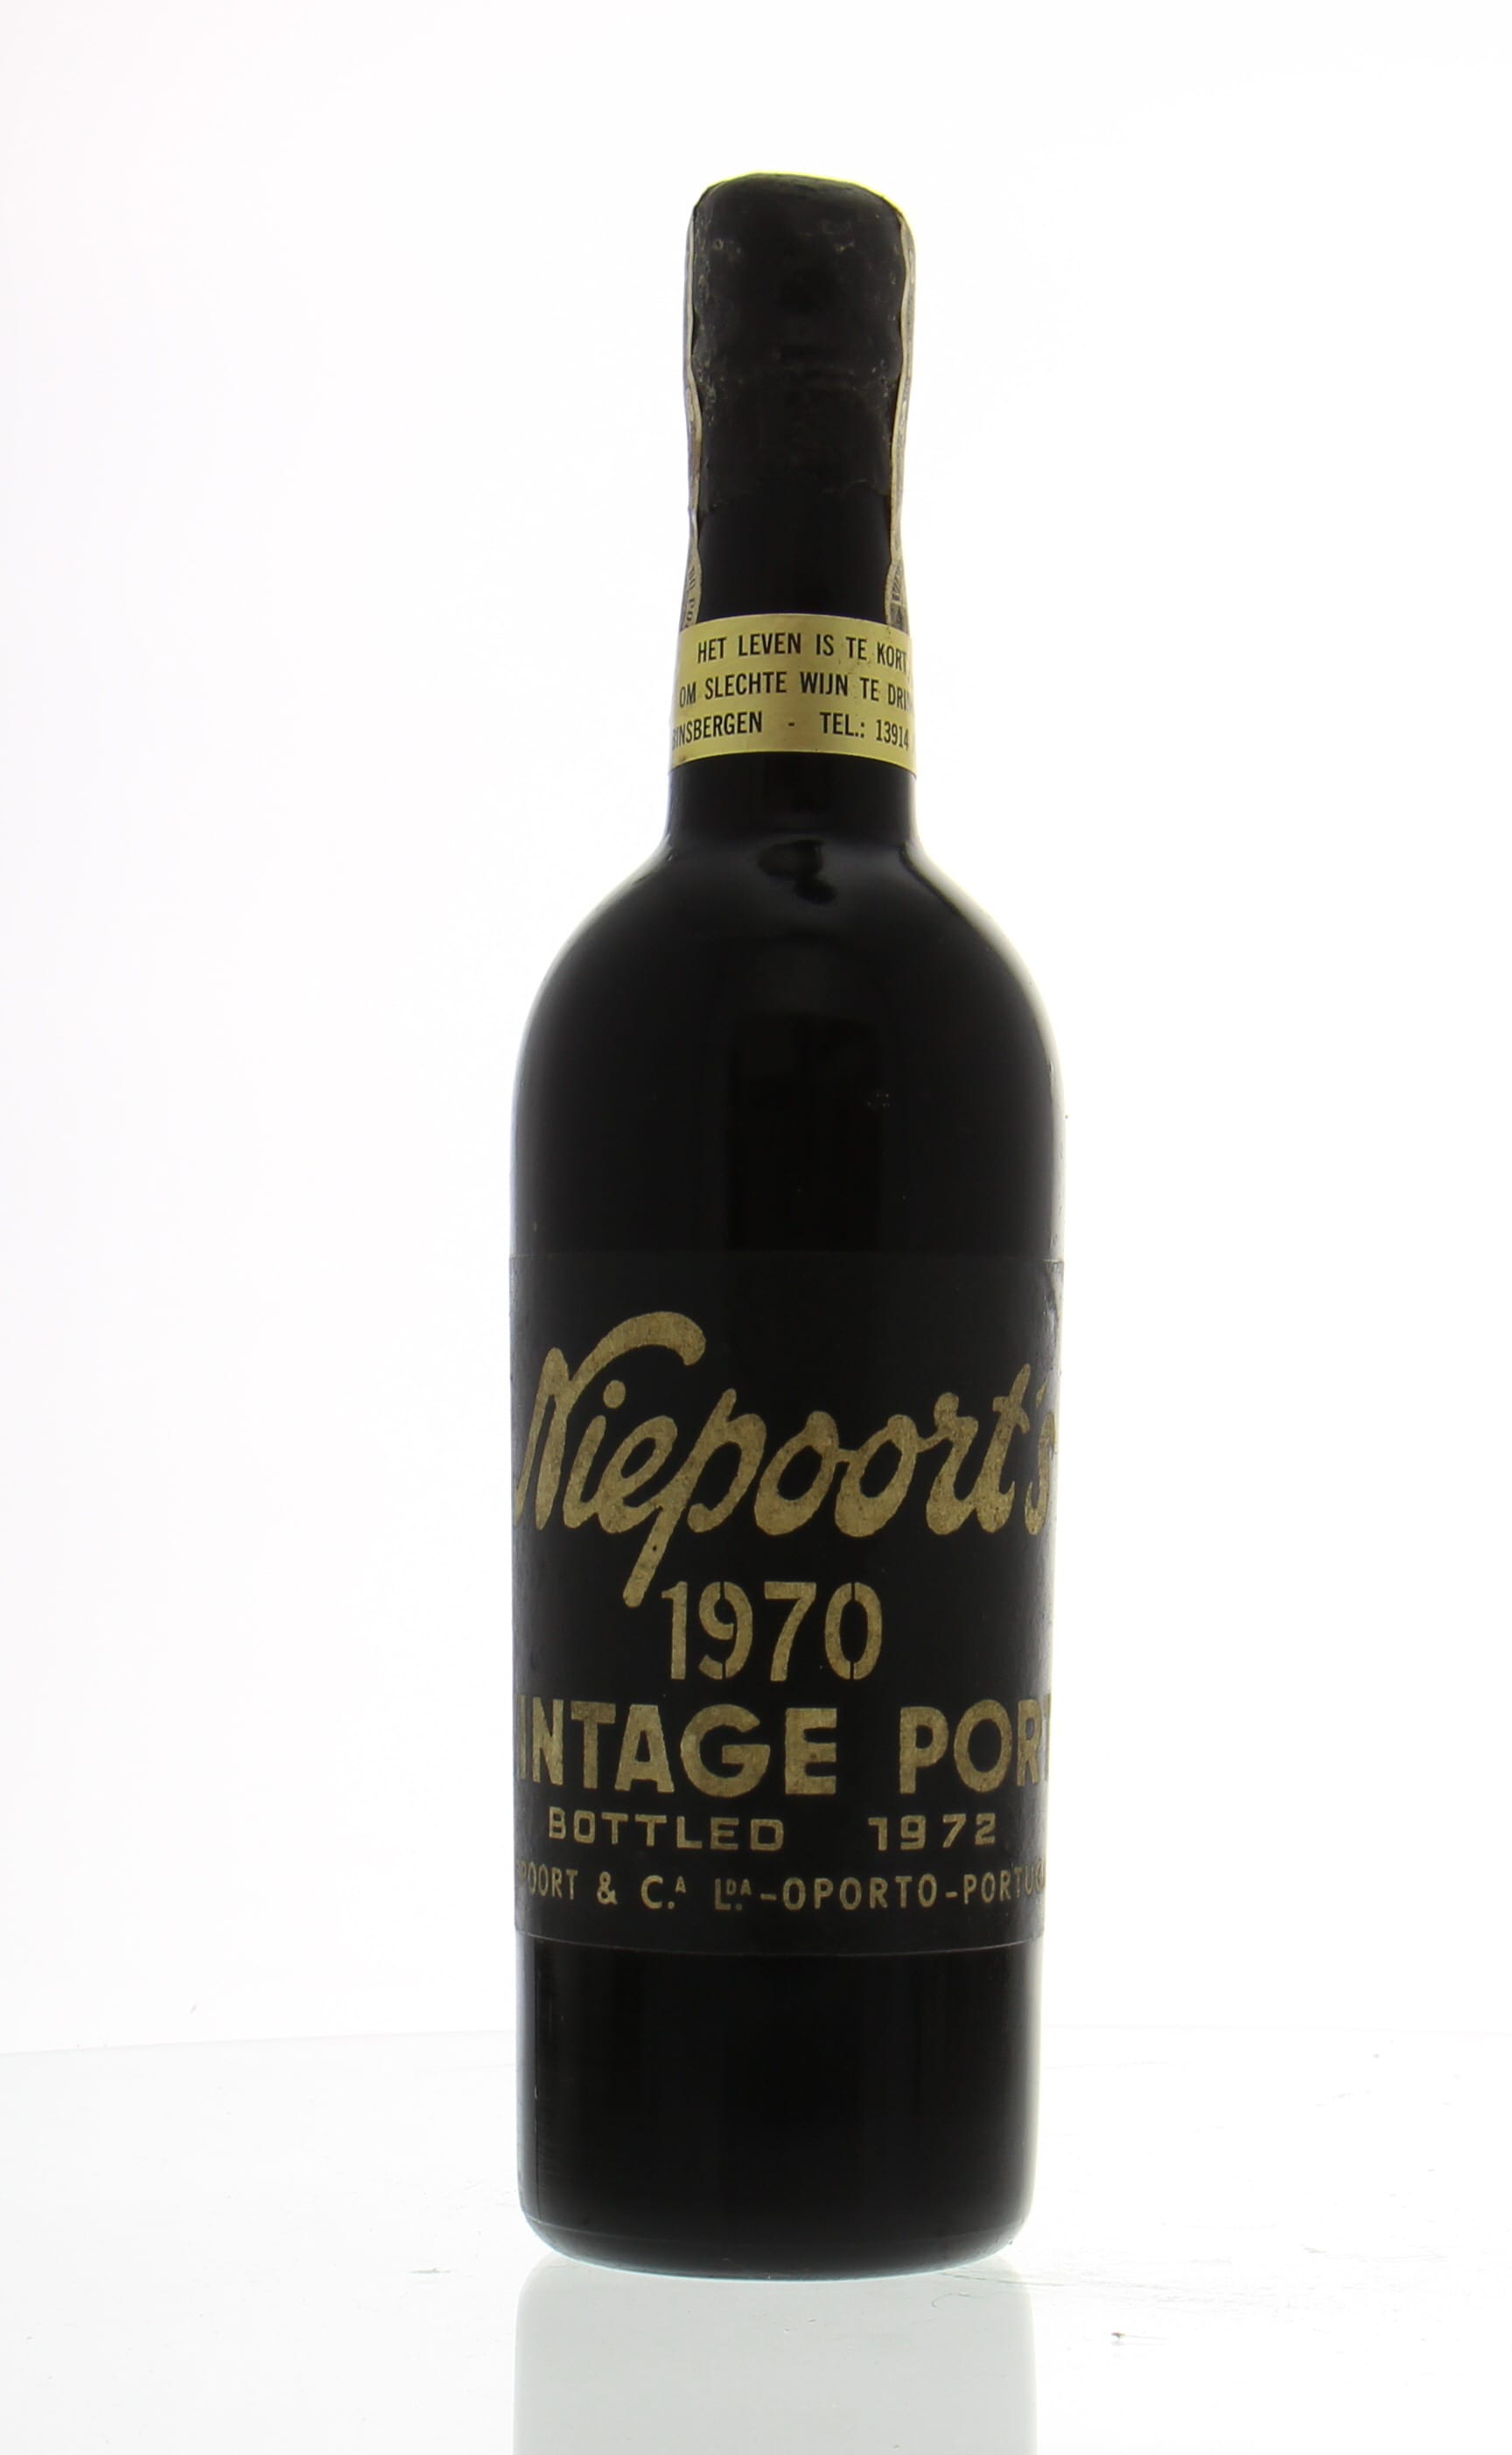 Niepoort - Vintage Port 1970 Perfect